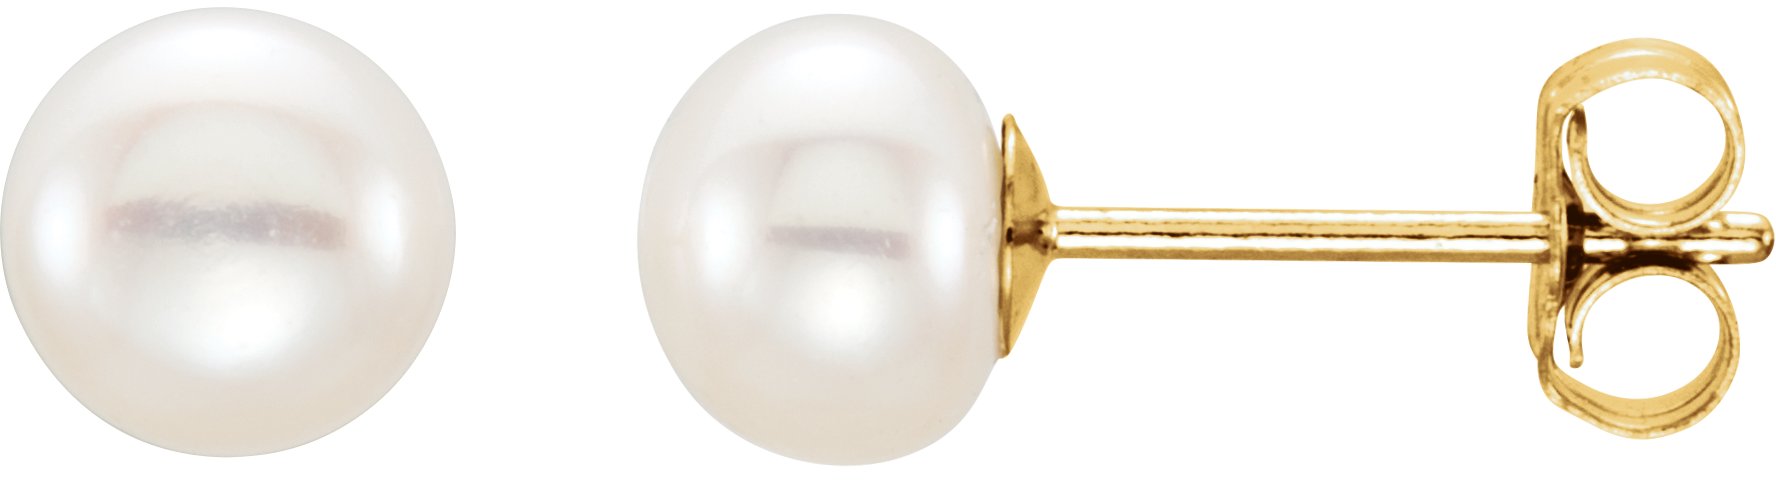 14K Yellow 5 6 mm White Freshwater Cultured Pearl Earrings Ref. 9995122